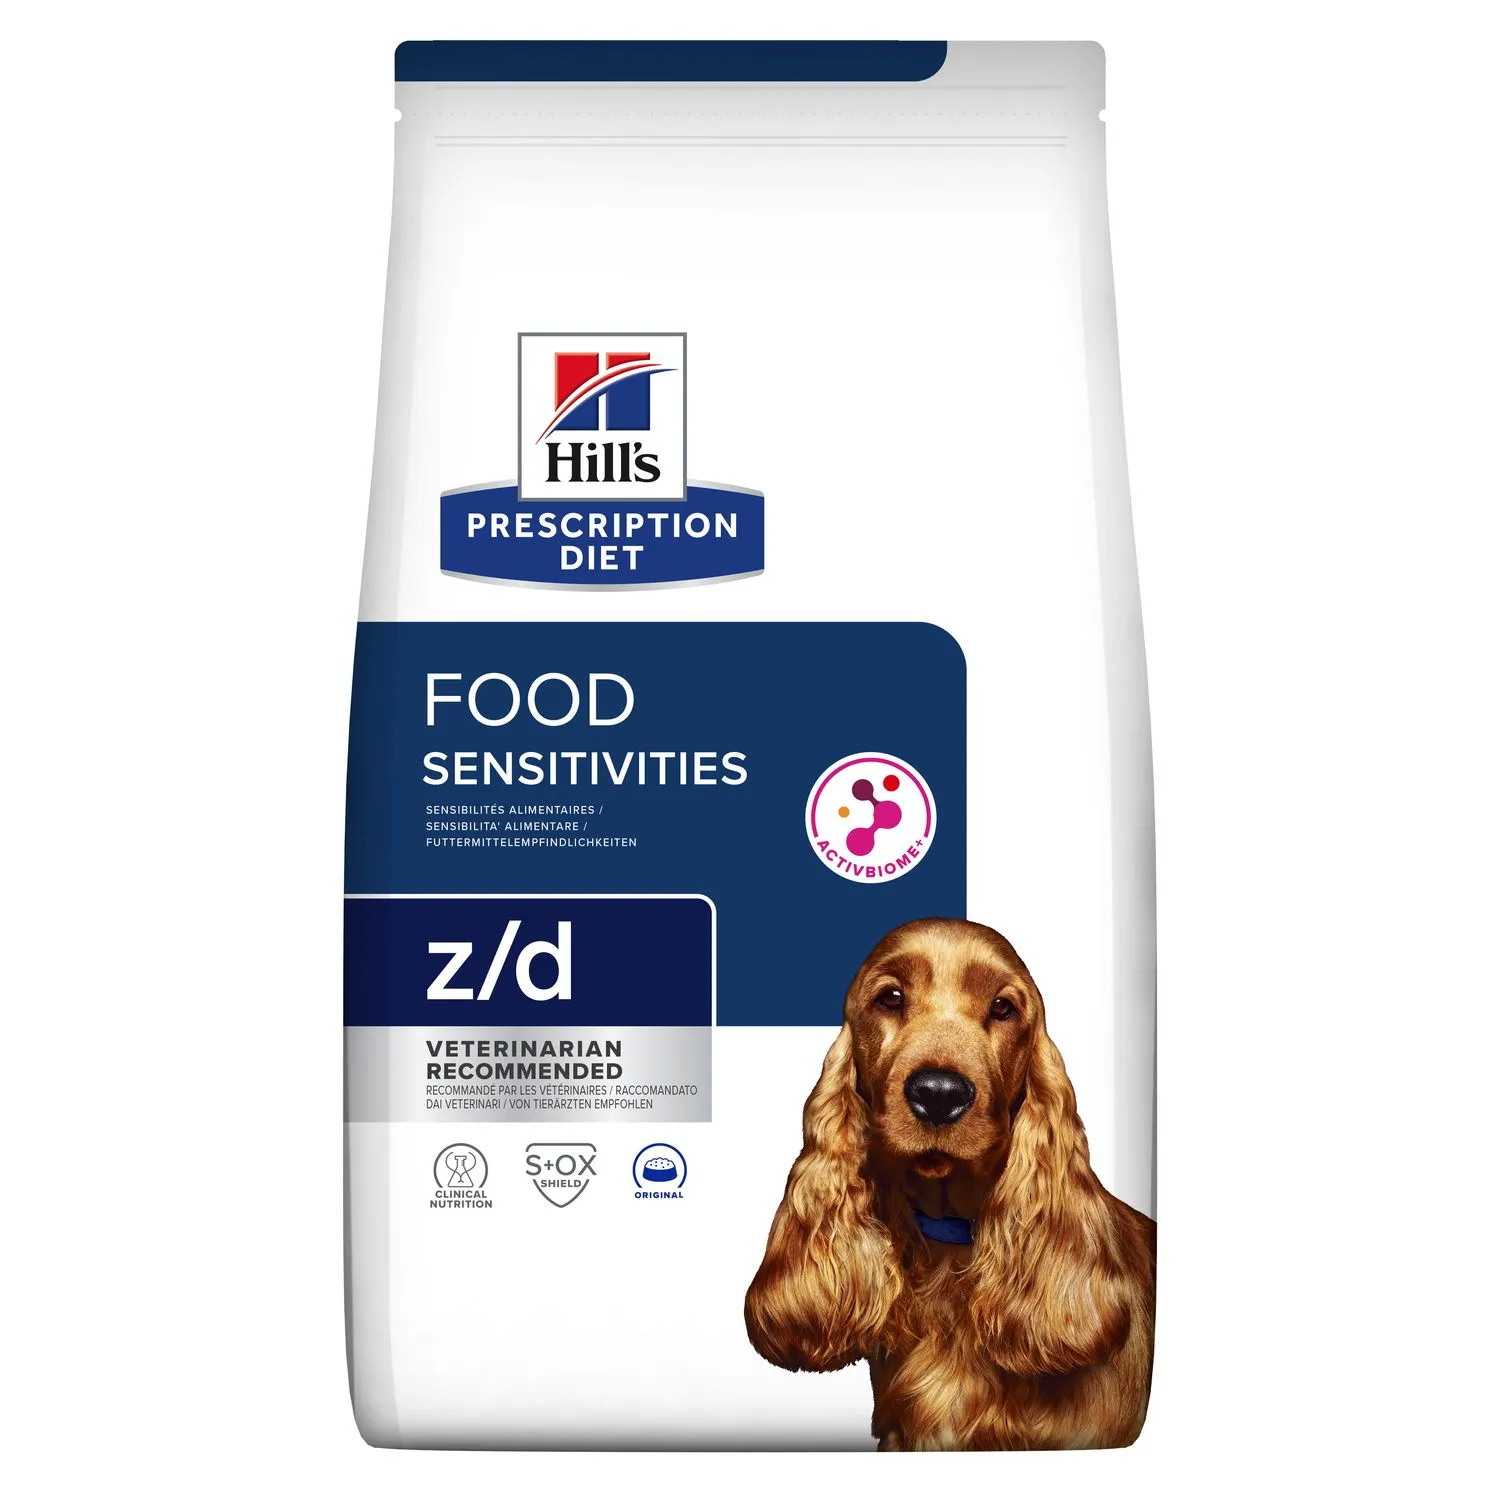 Hill's Prescription Diet z/d Dog Food. Hypoallergenic dog food 